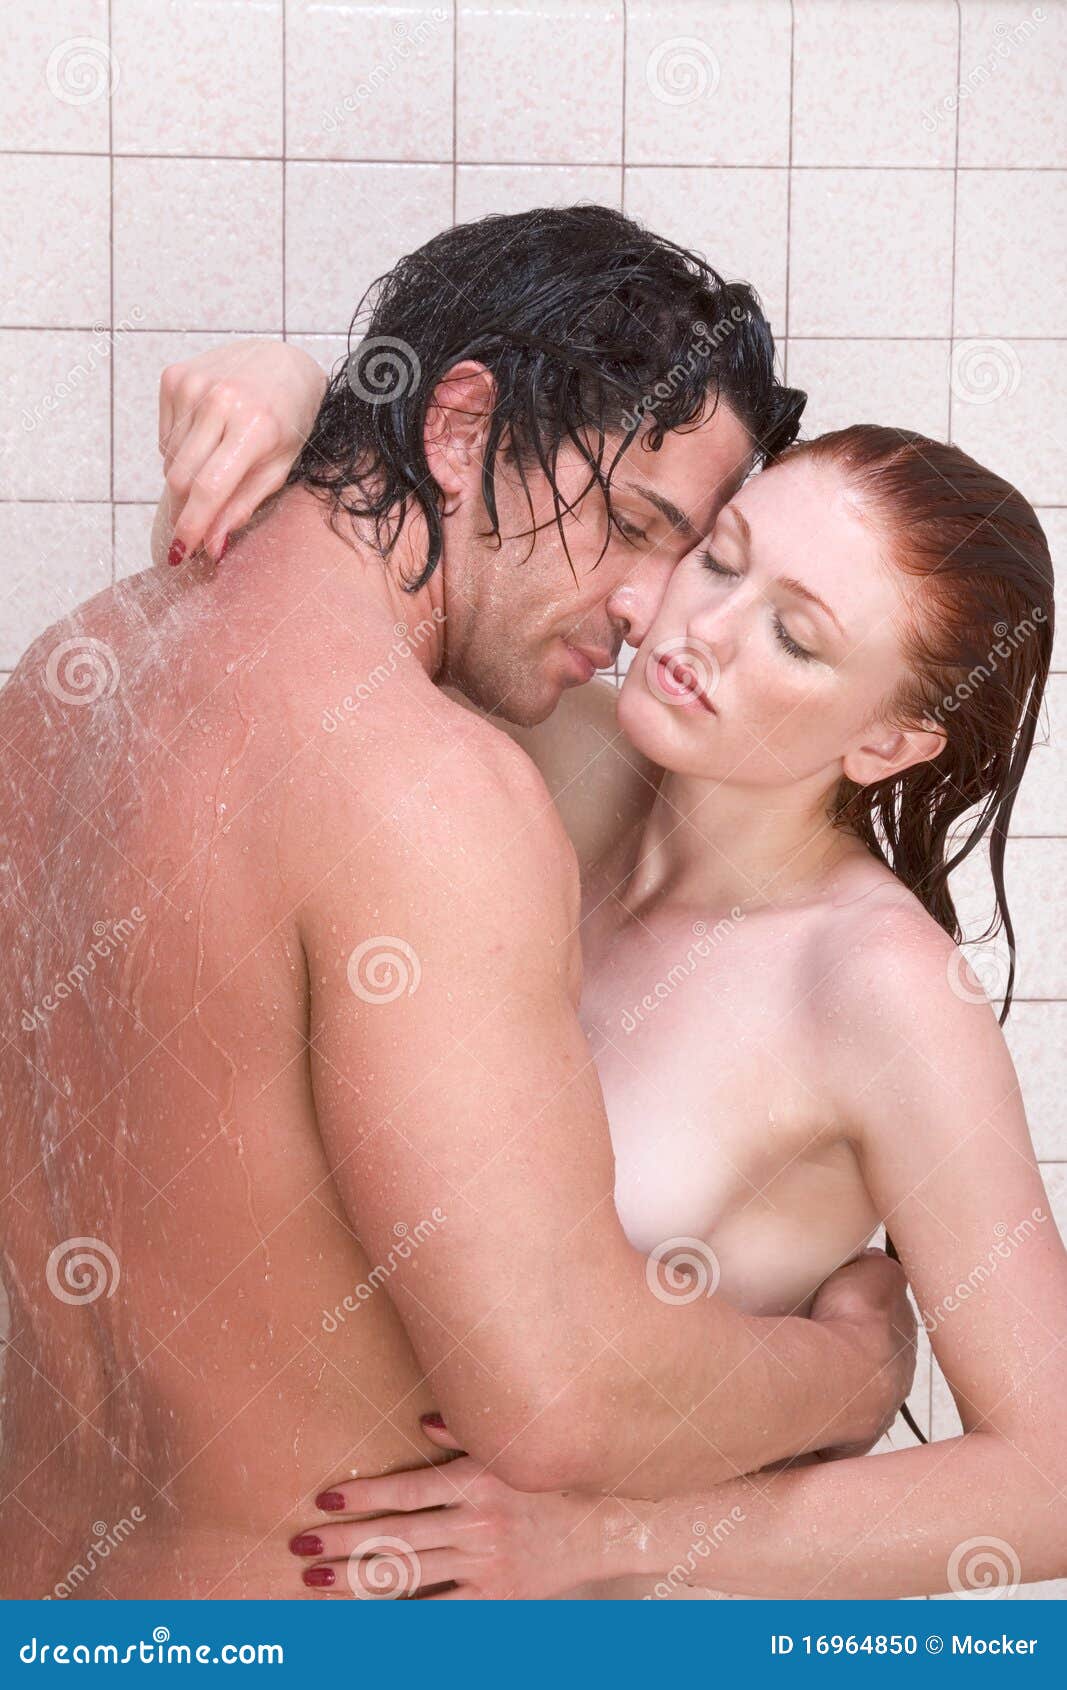 Nude shower dreamstime mocker